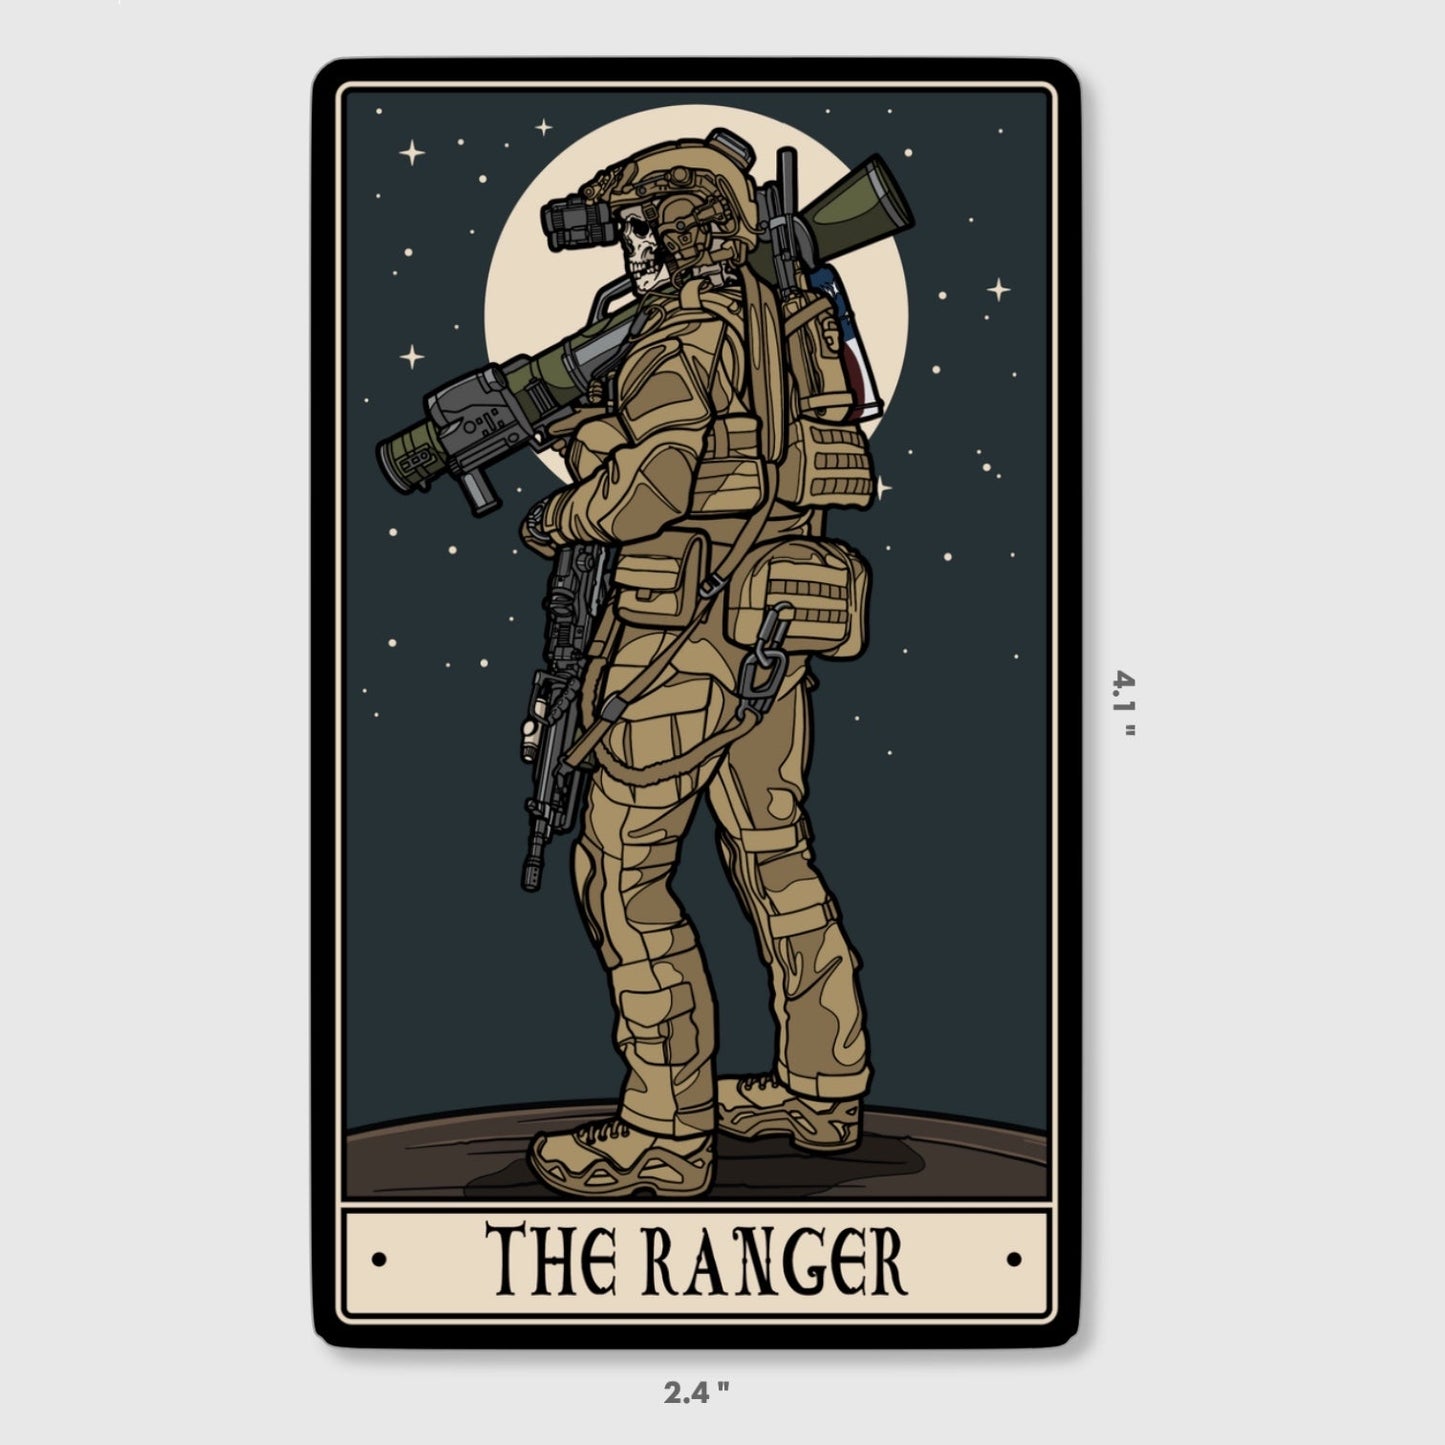 Ranger Sticker